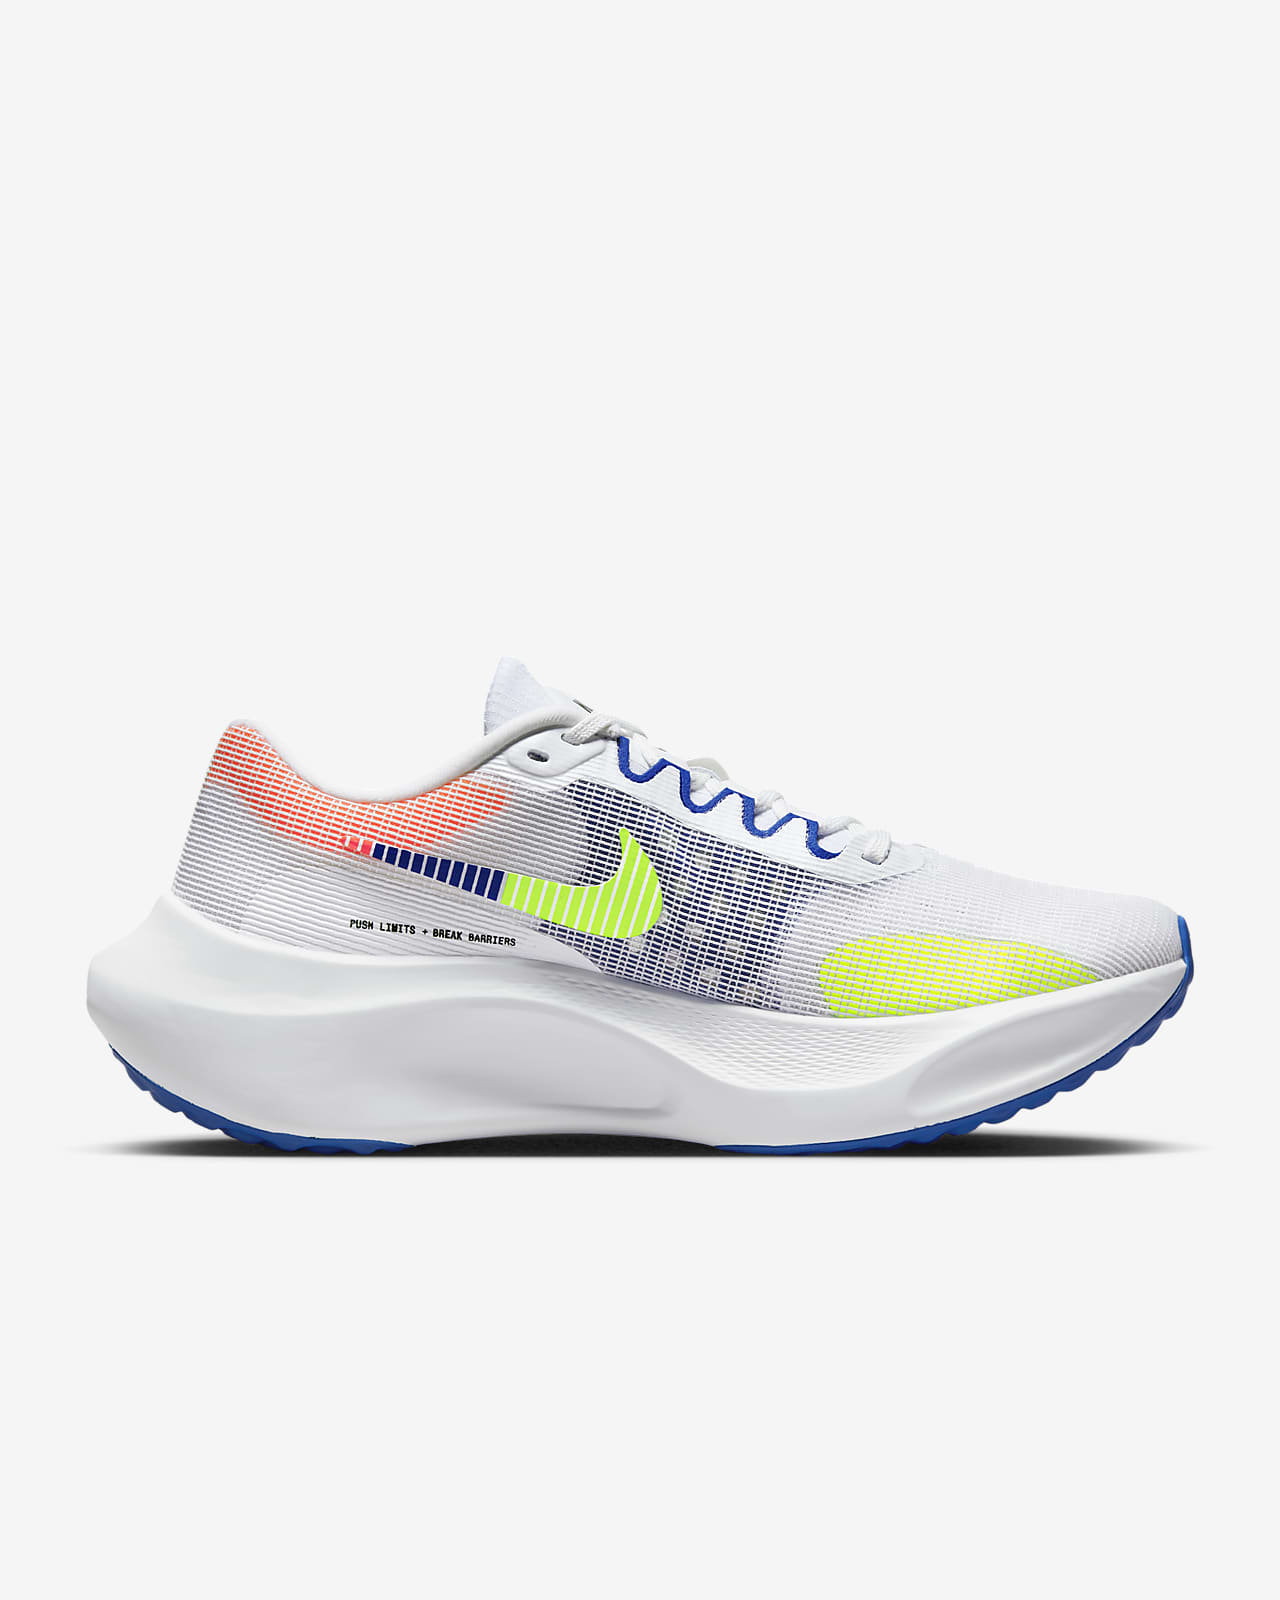 Nike Zoom Fly 5 Premium Men's Road Running Shoes